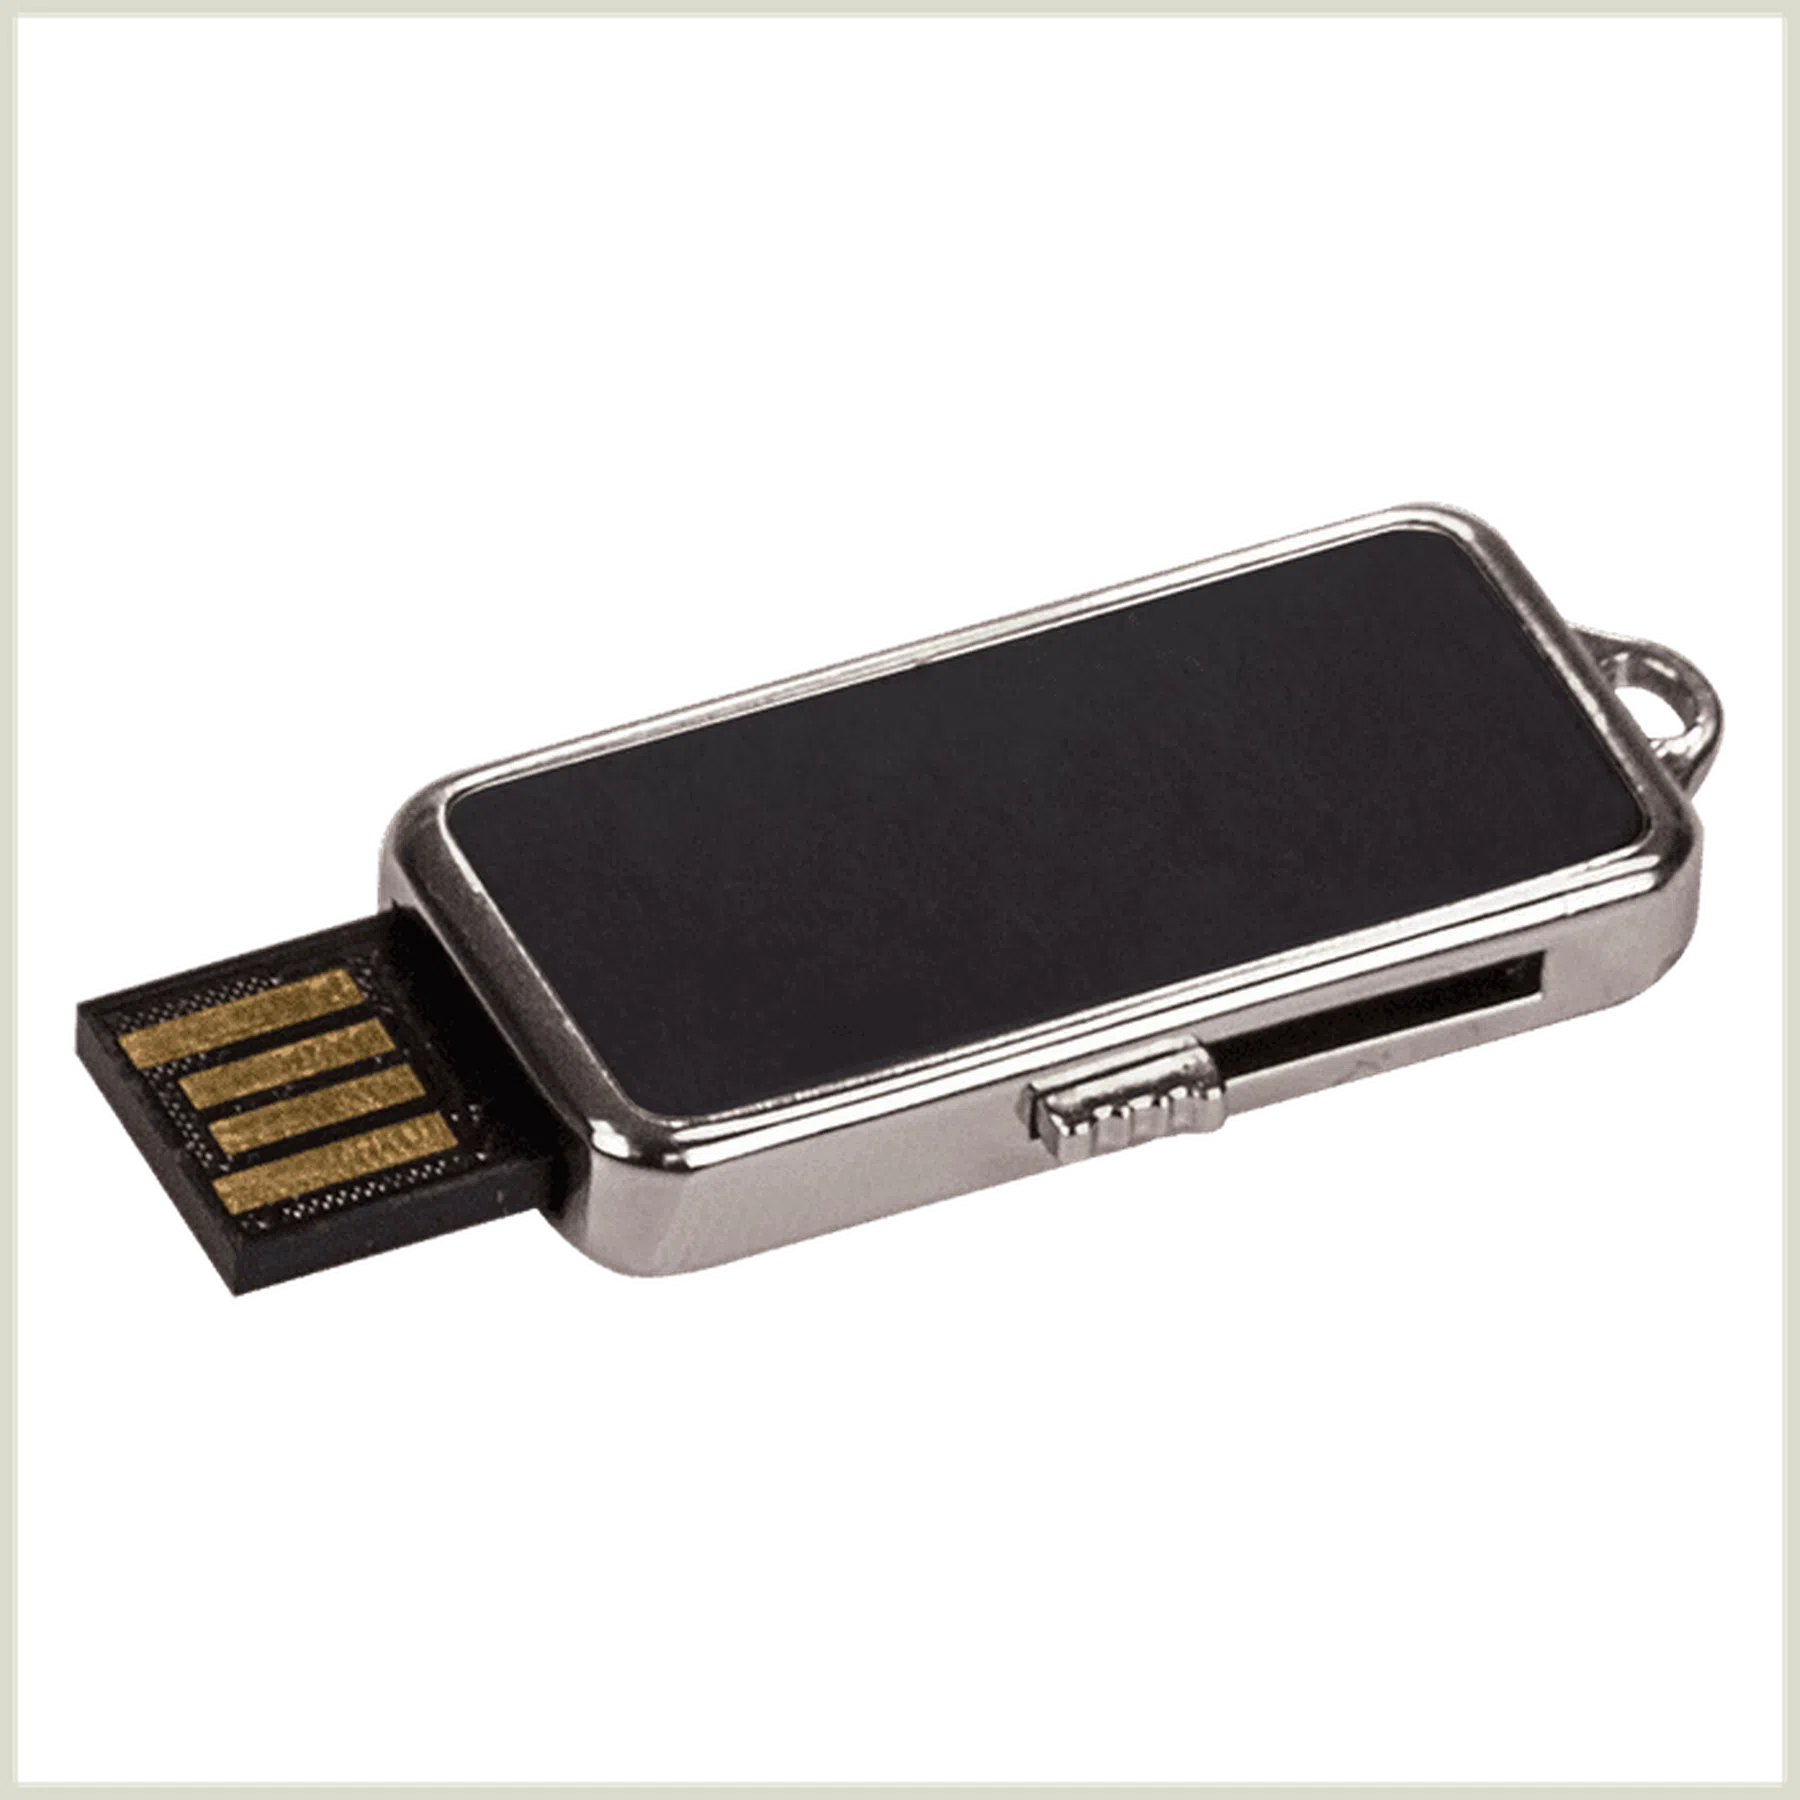 Anodized Aluminum 8GB USB Flash Drive